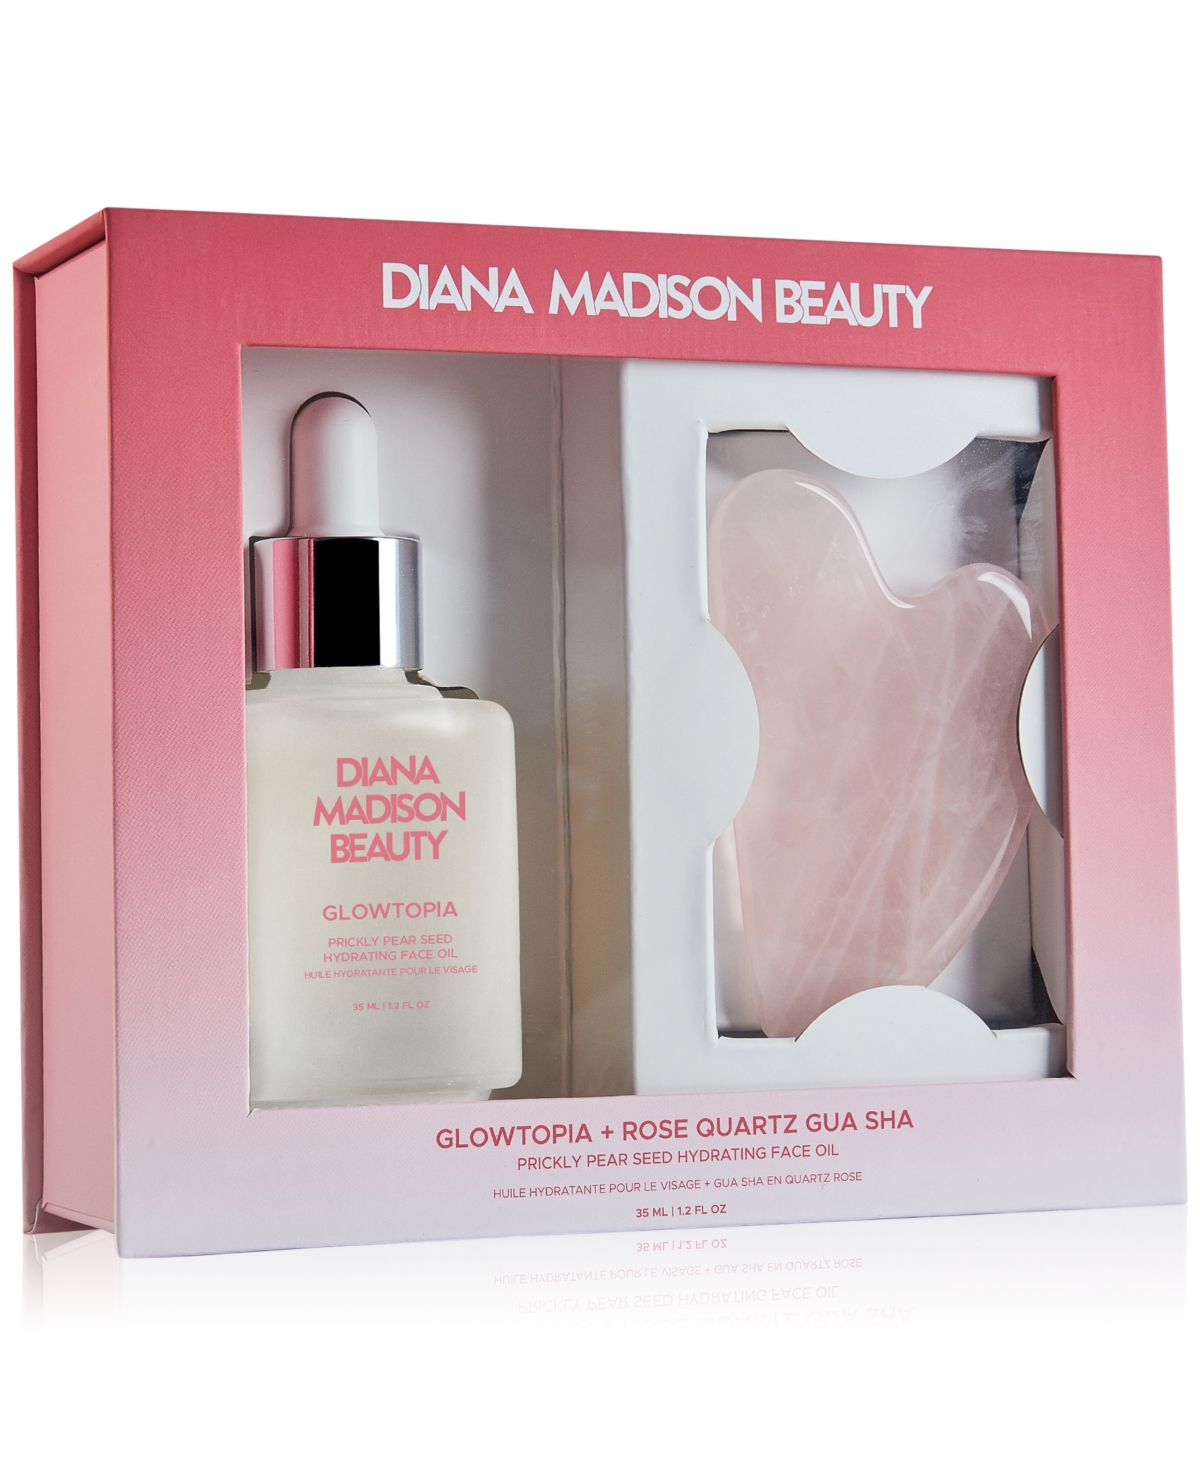 Diana Madison Beauty Glowtopia + Rose Quartz Gua Sha Gift Set ($69 Value) In No Color